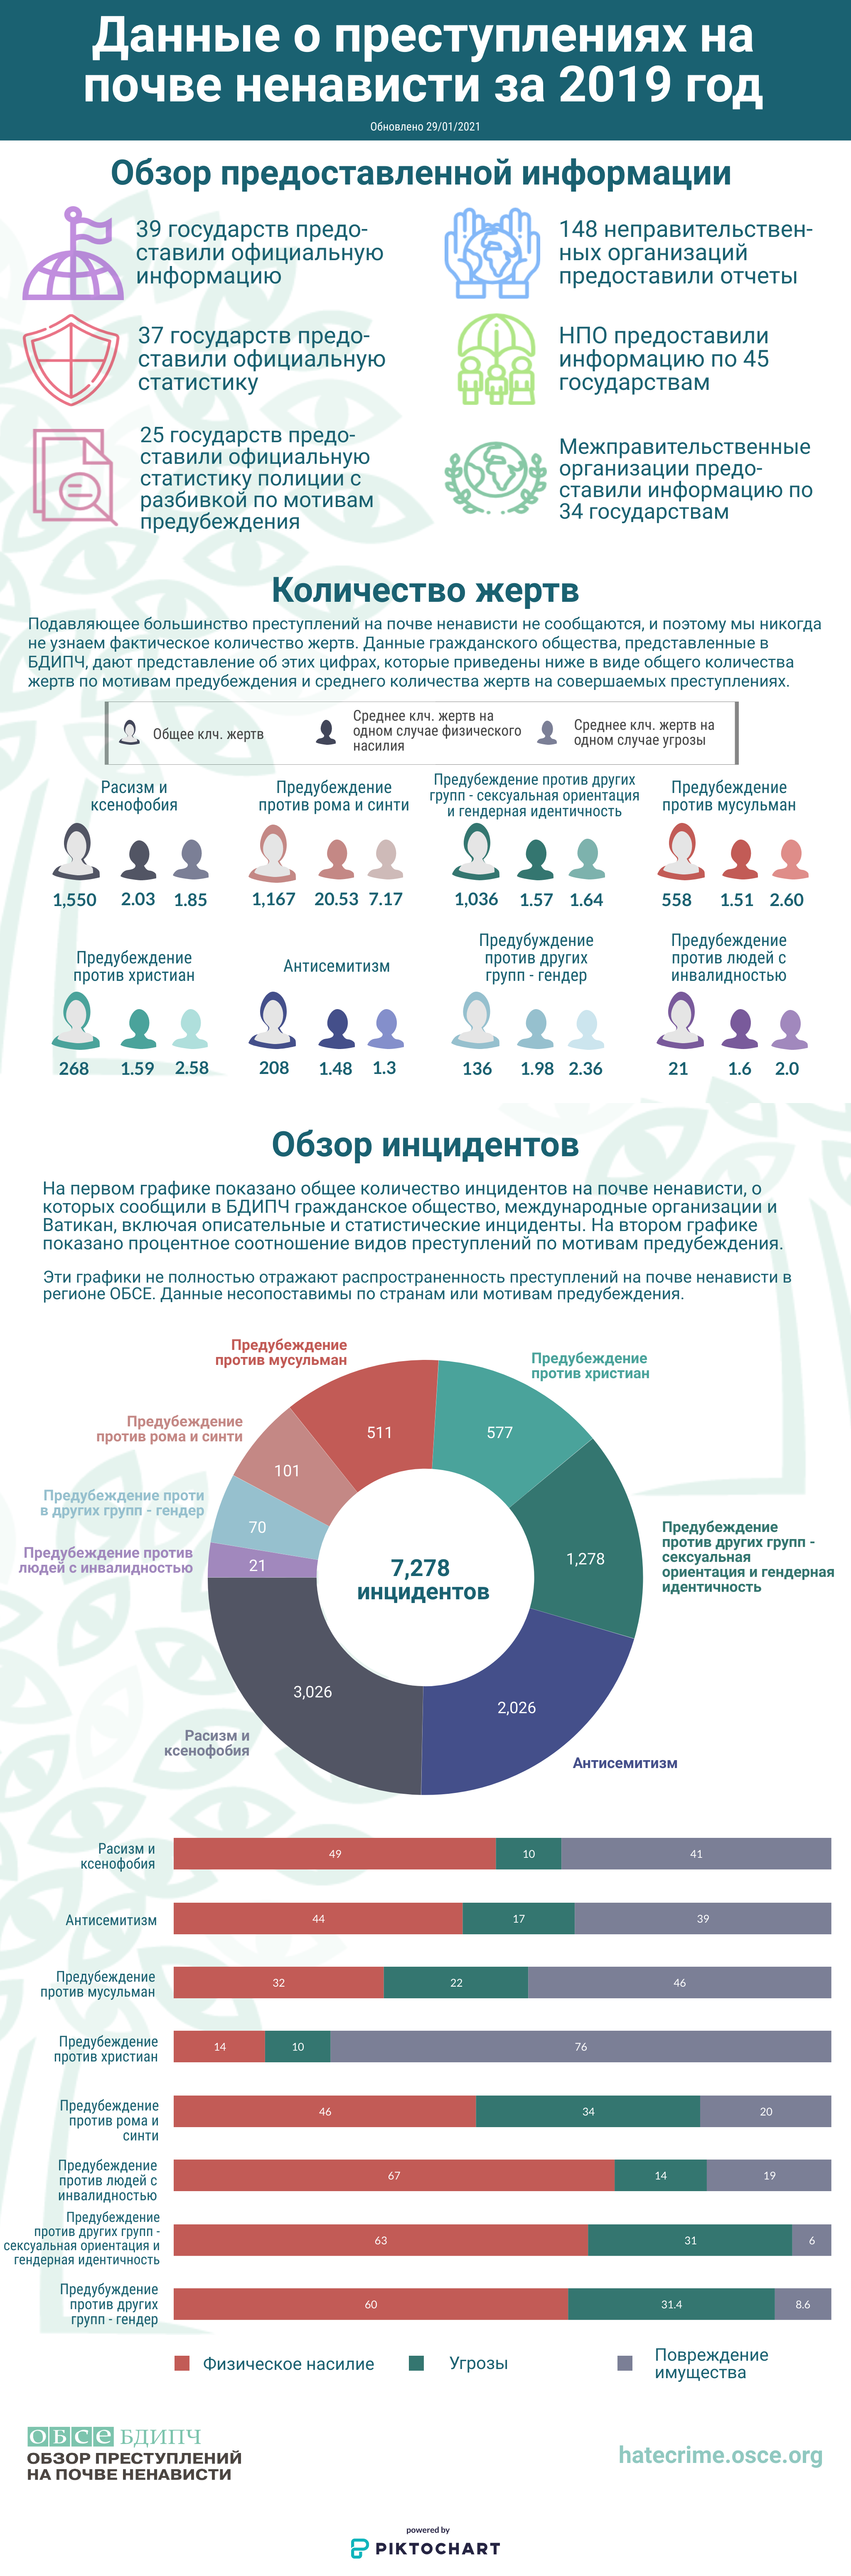 2019 HCR infographic publication_RU